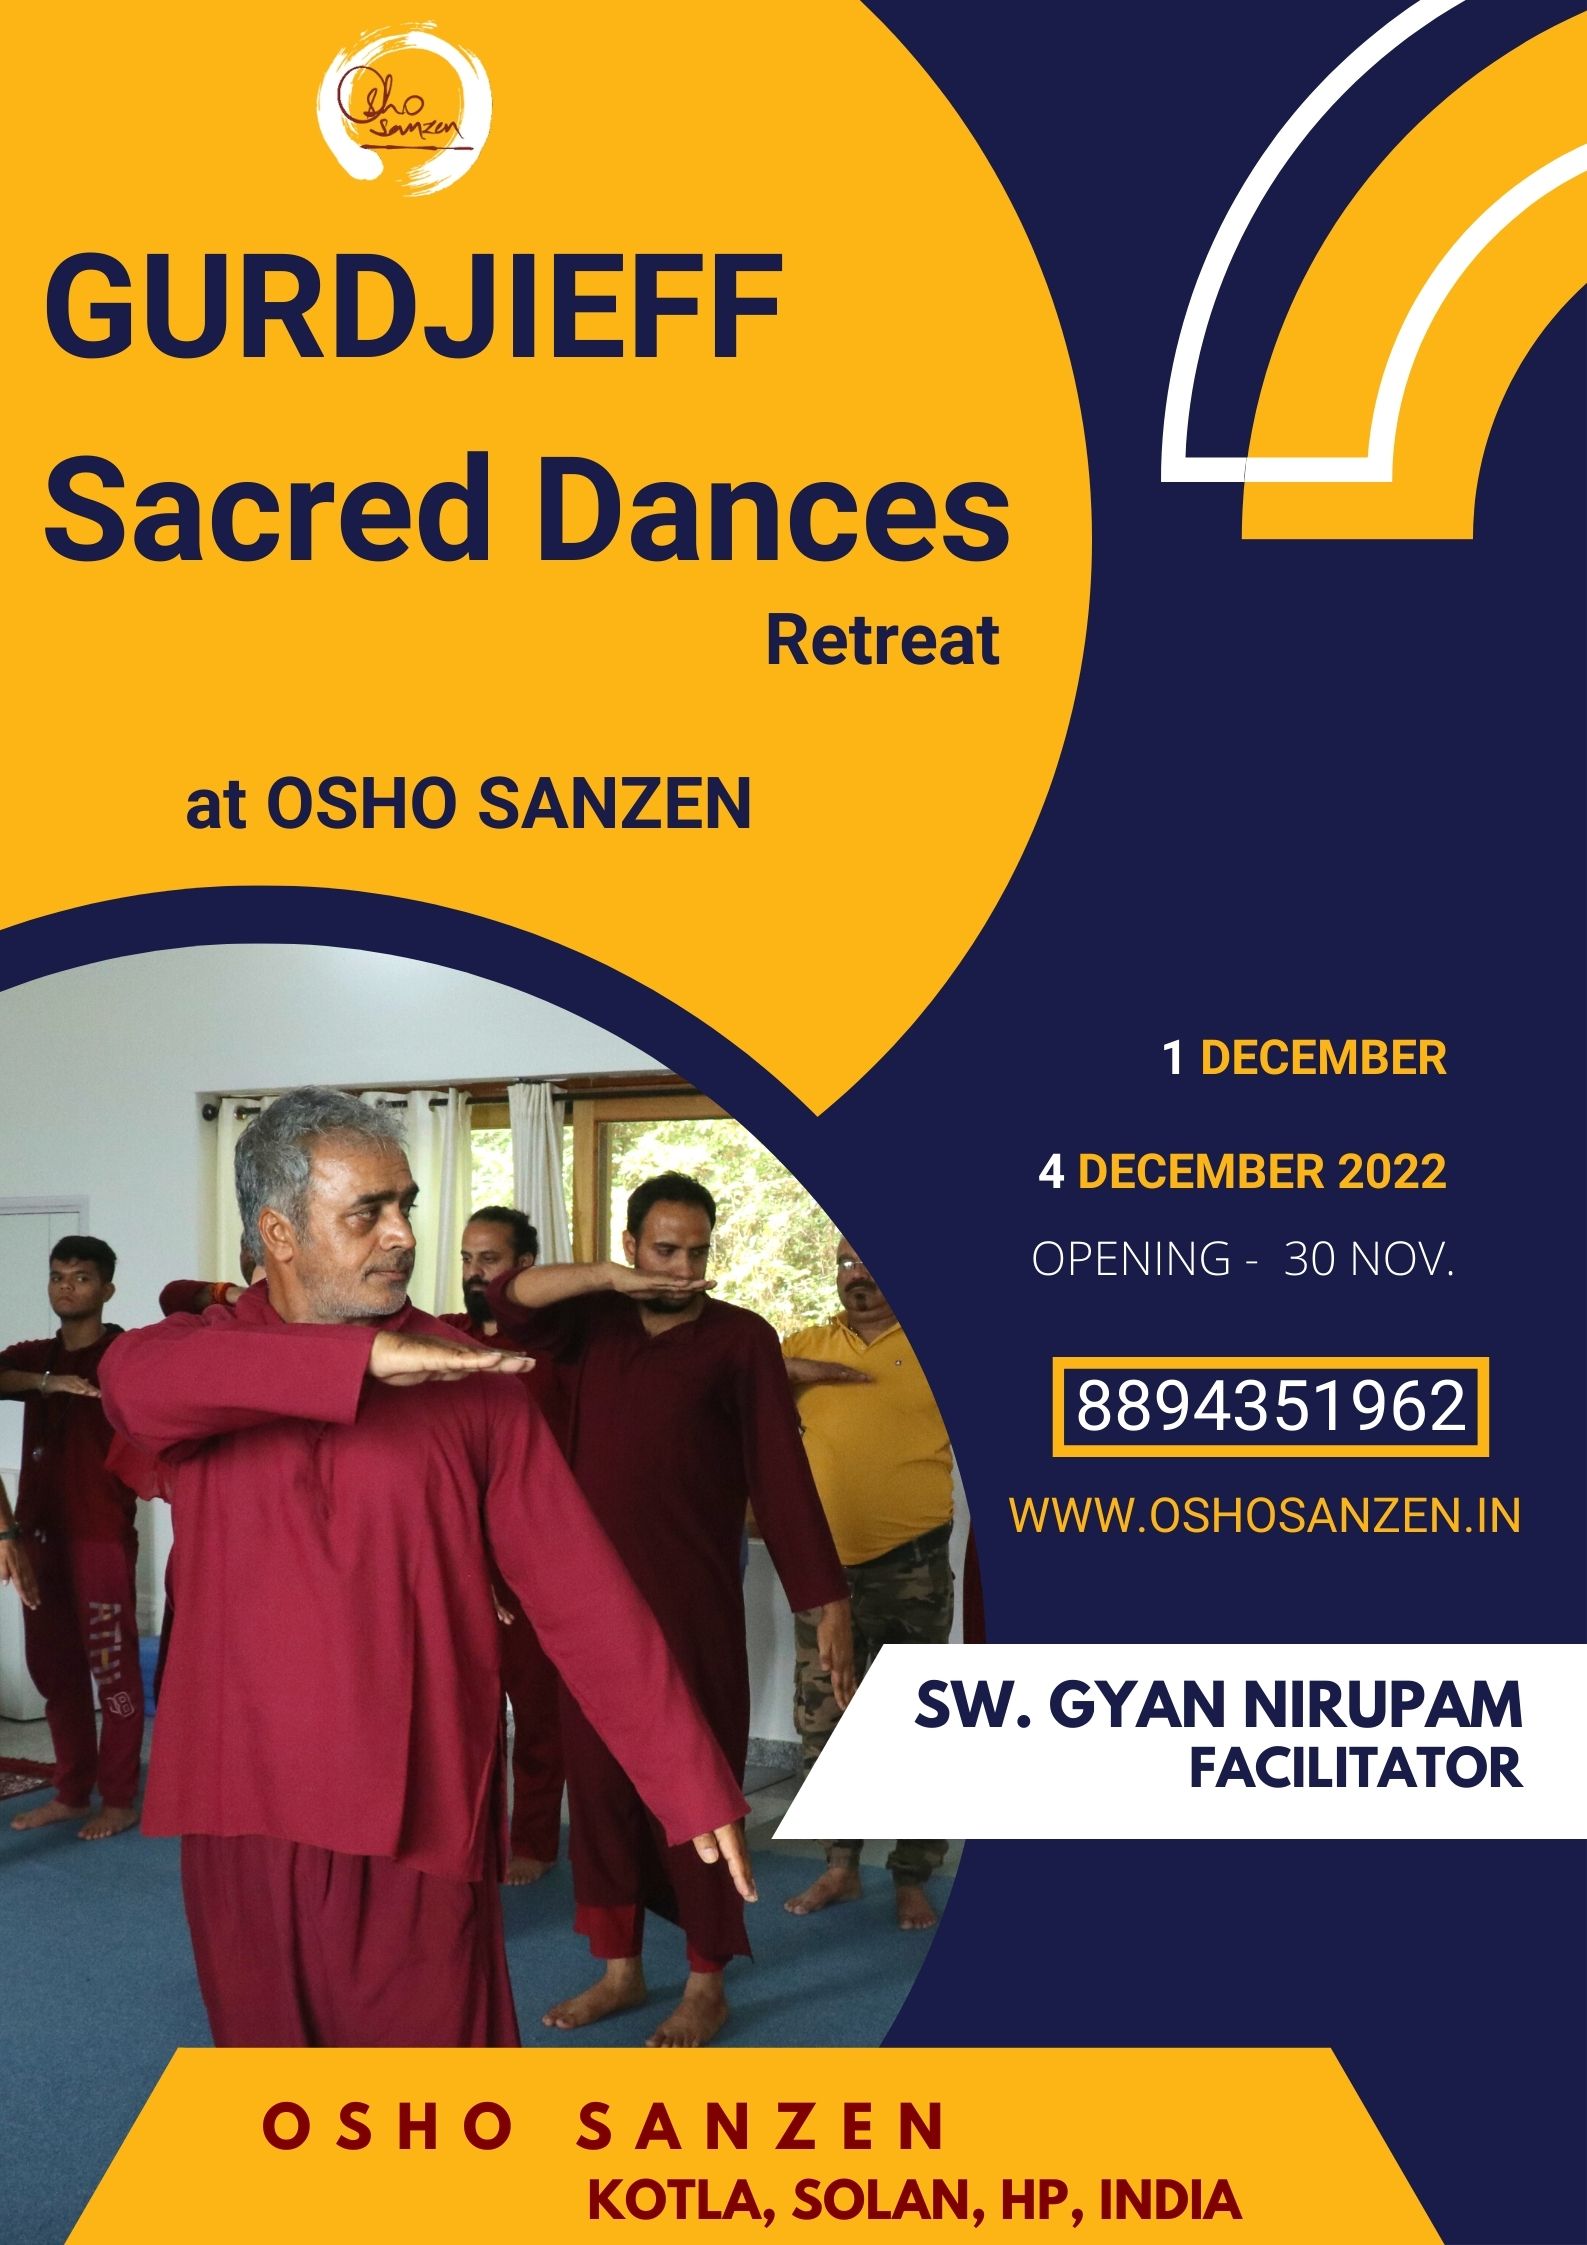 Gurdjieff Sacred dances